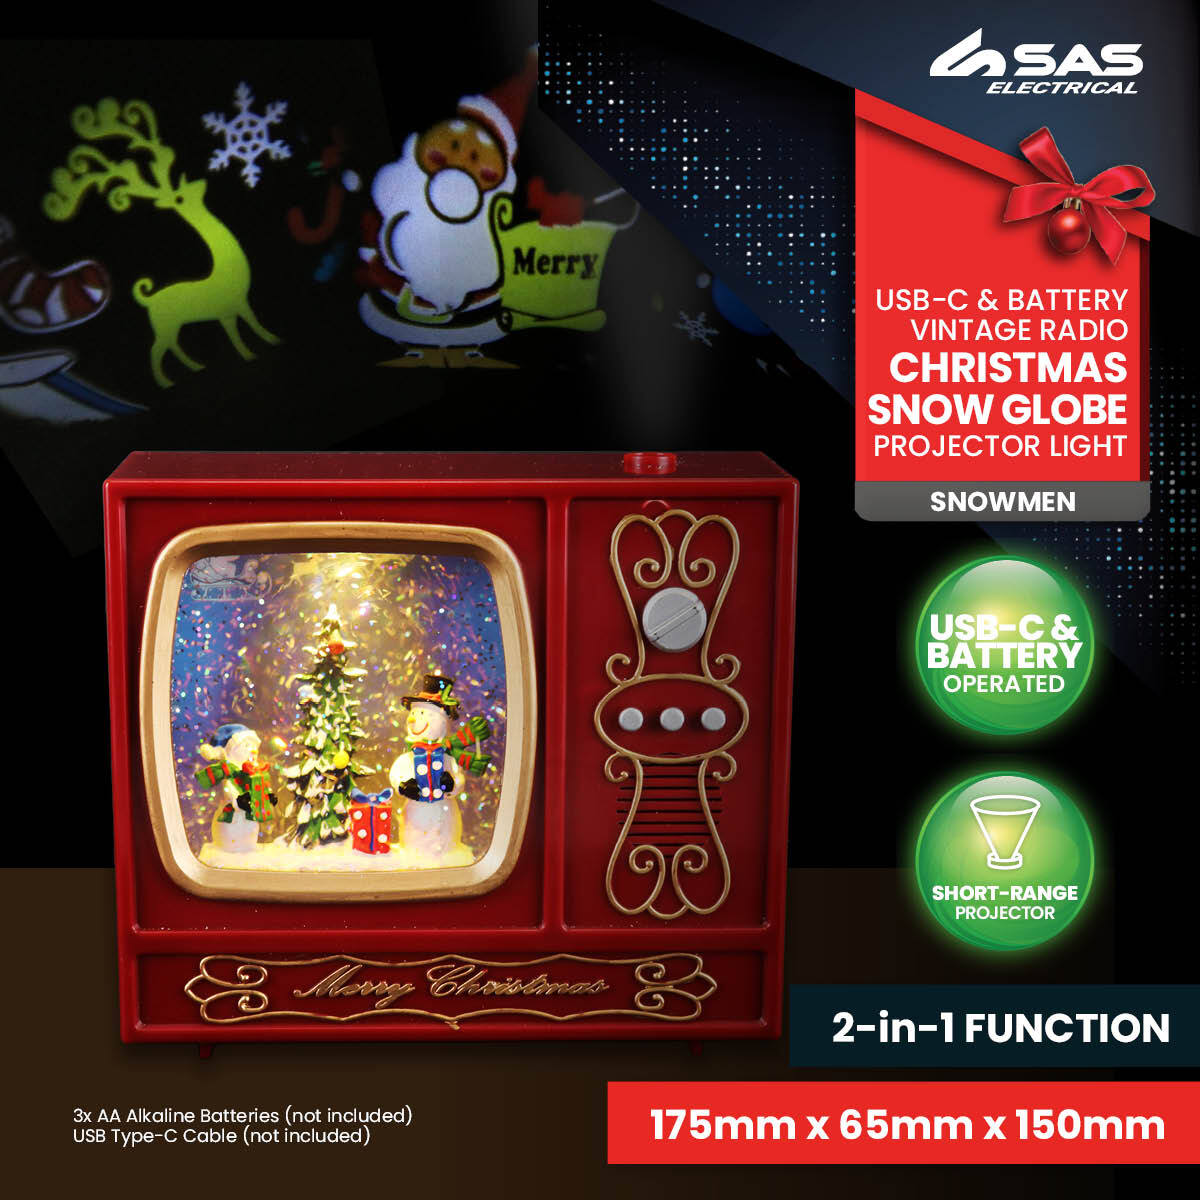 SAS Electrical 2-in-1 Vintage Radio Christmas Snowmen Snow Globe & Projector